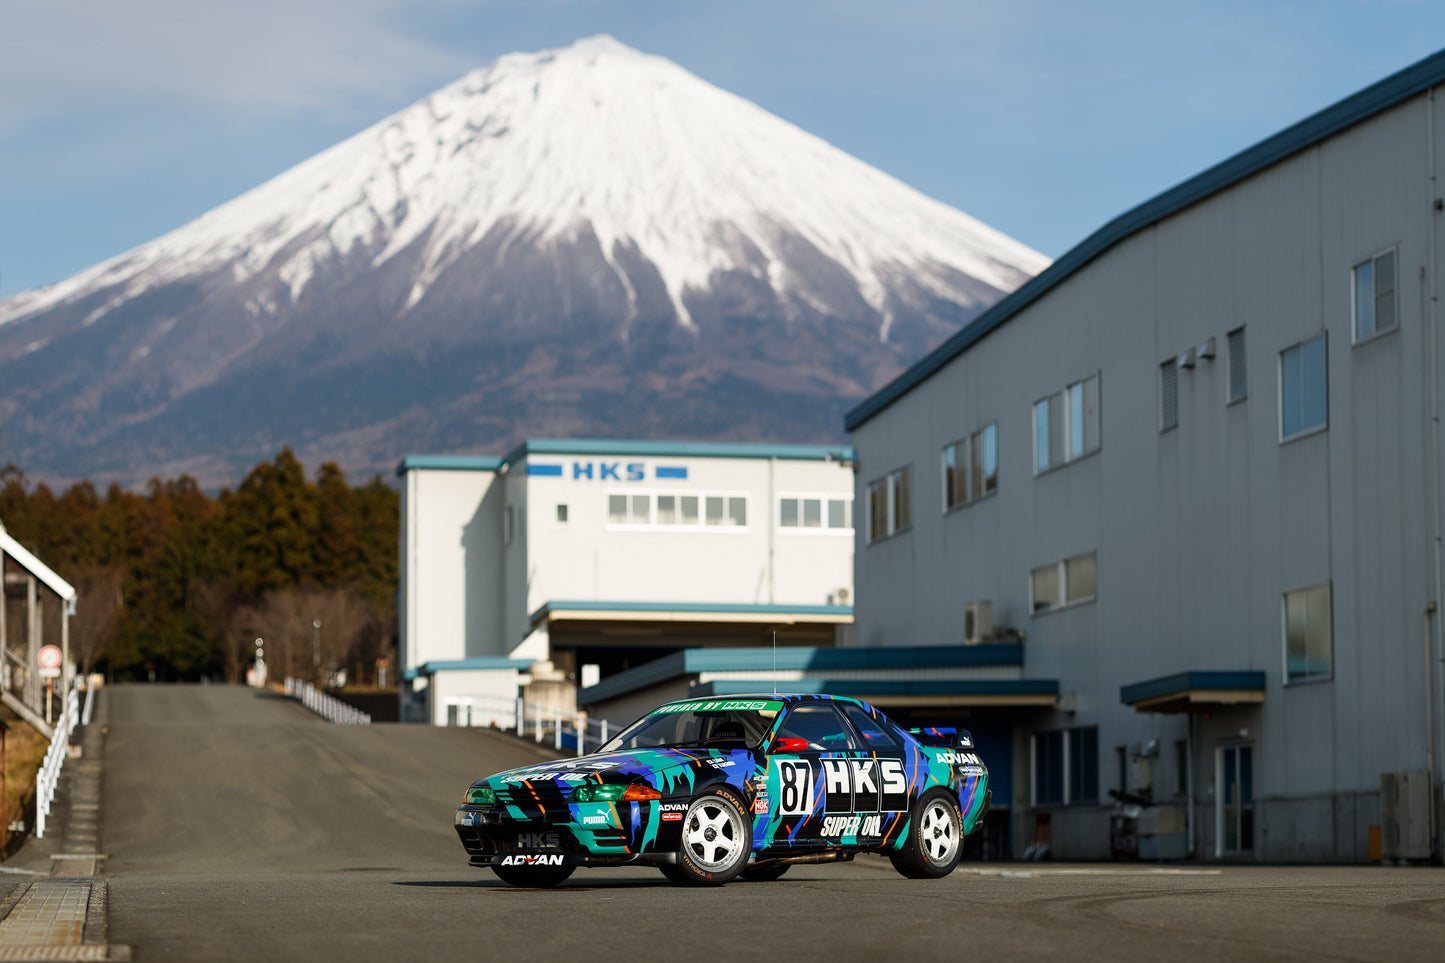 Nissan Skyline R32 GT-R Group A | HKS Mt. Fuji Japan |